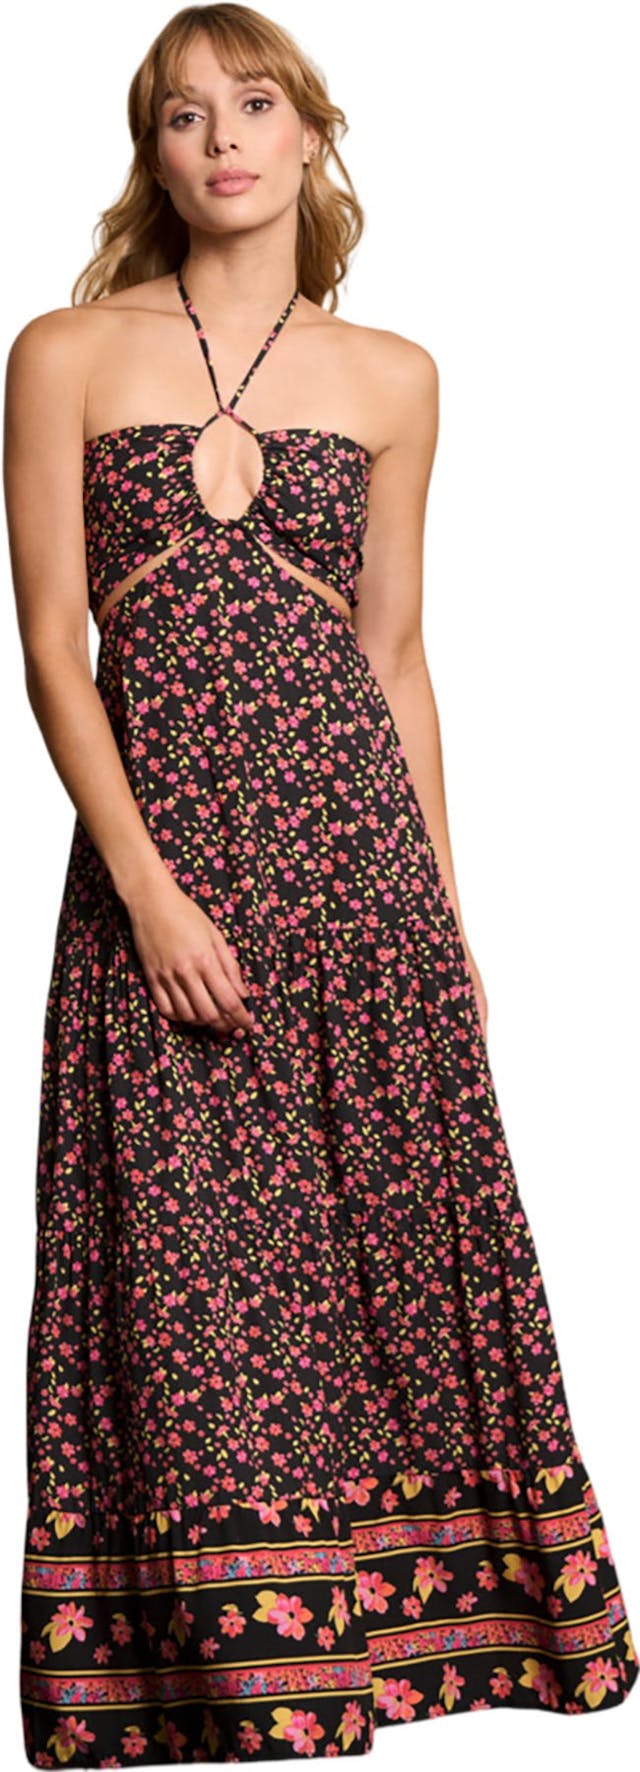 Product image for Hattie Pansie Long Dress - Women's